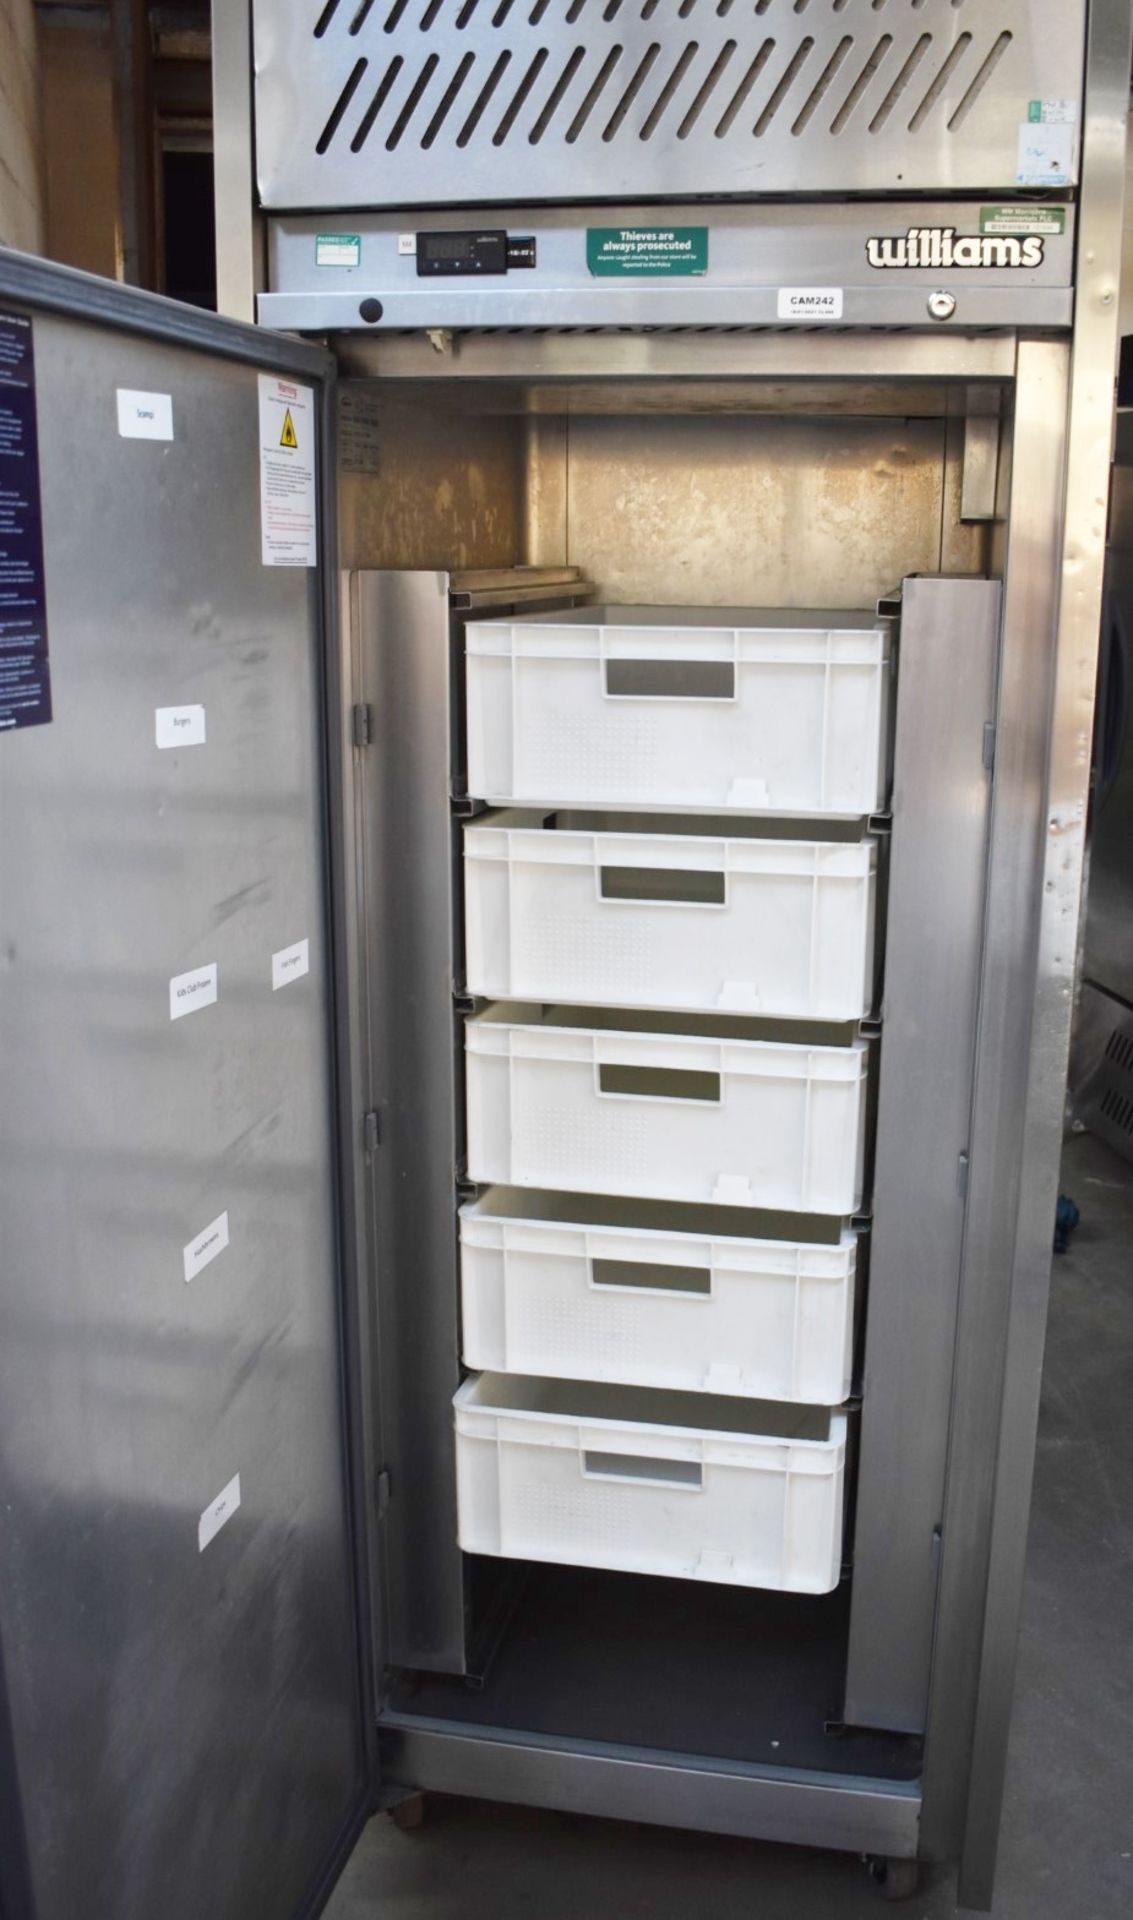 1 x Williams Jade Upright Single Door Refrigerator Stainless Steel Exterior & Internal Bakery Trays - Image 3 of 8